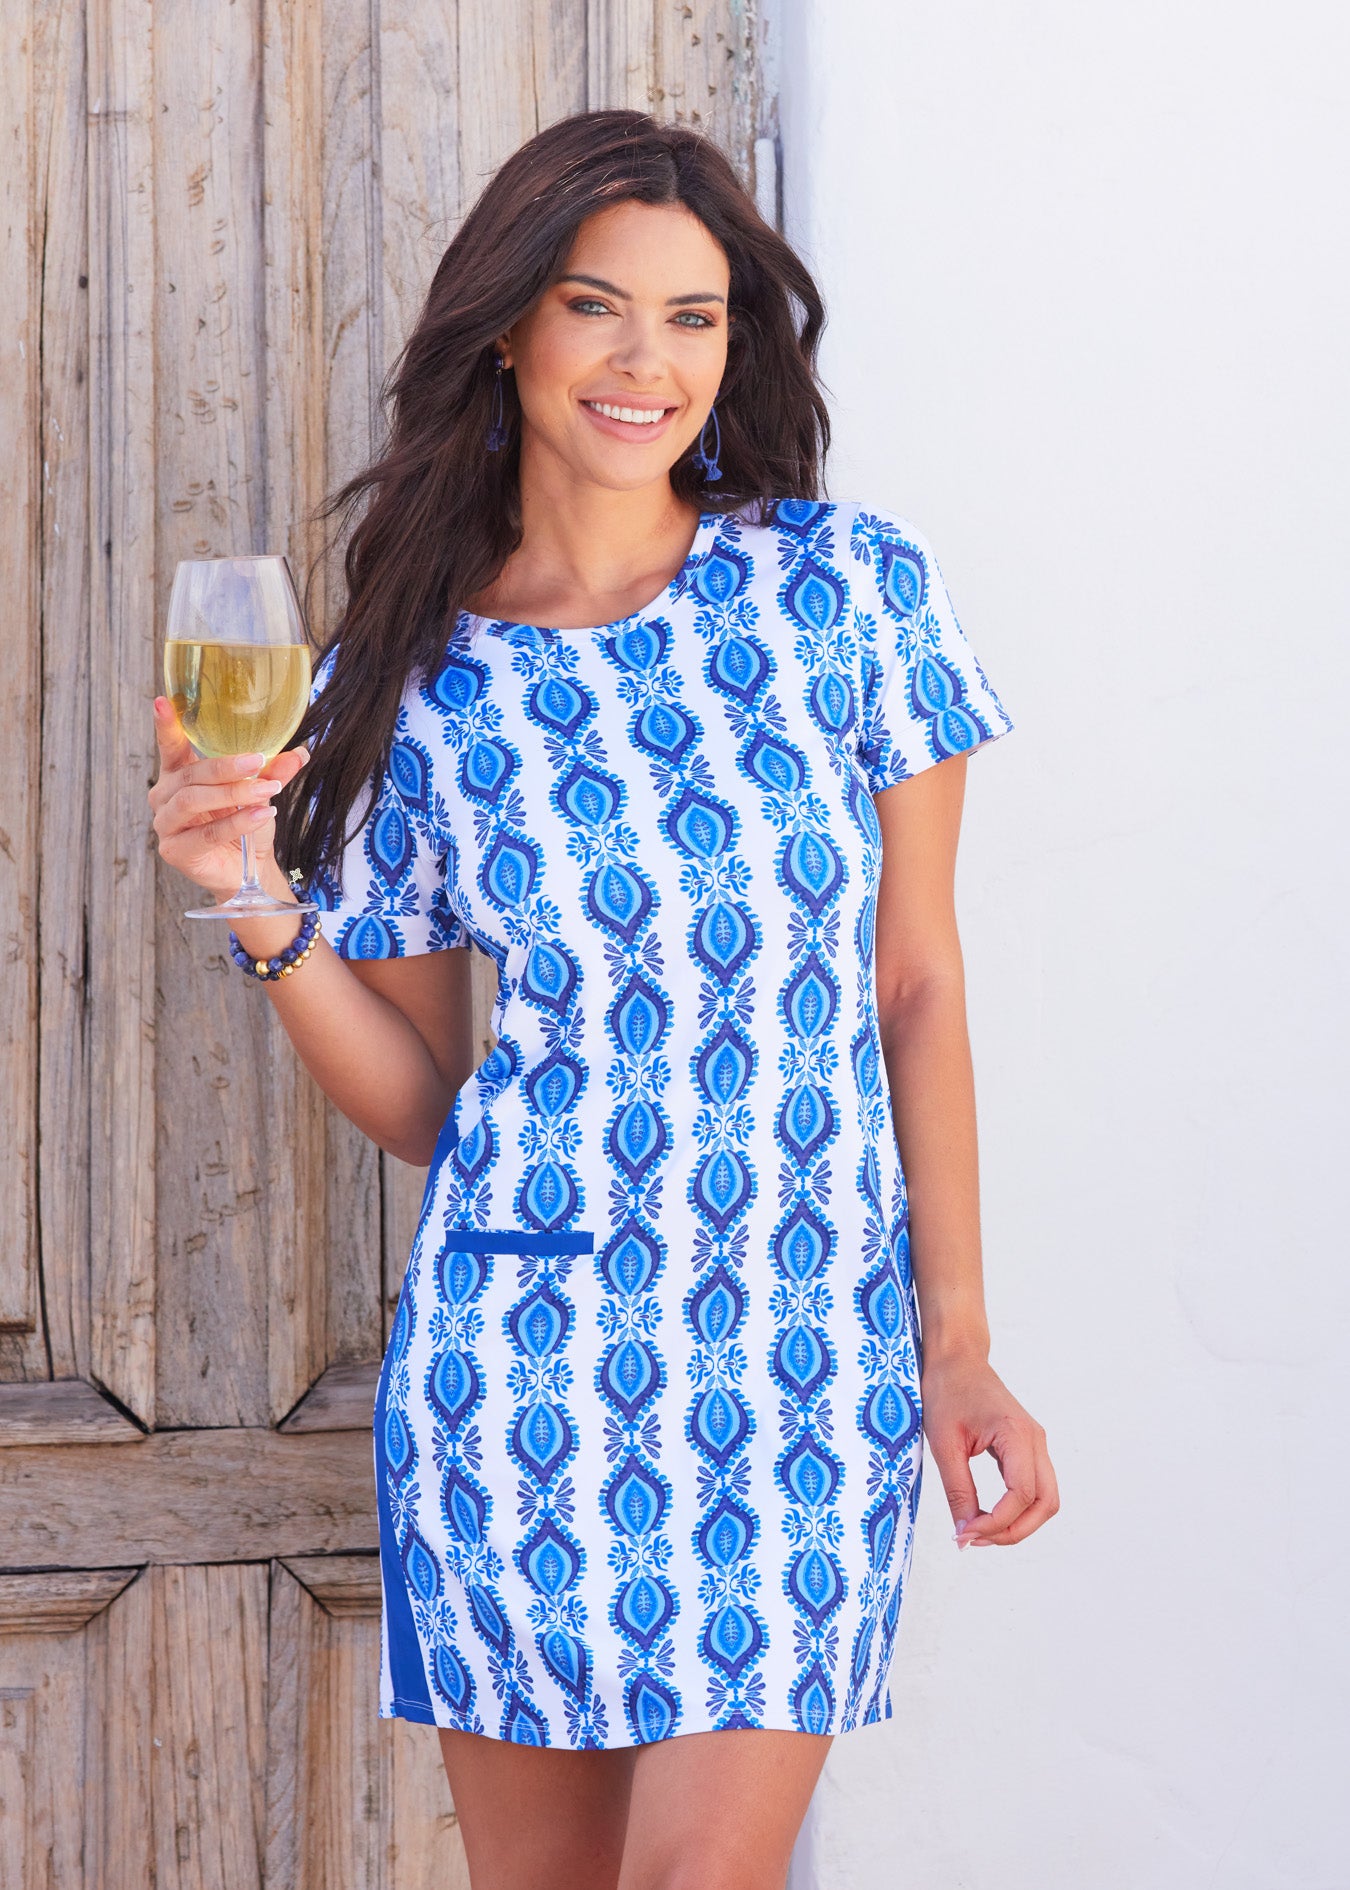 Woman smiling wearing San Sebastian Short Sleeve Tee Dress holding white wine glass